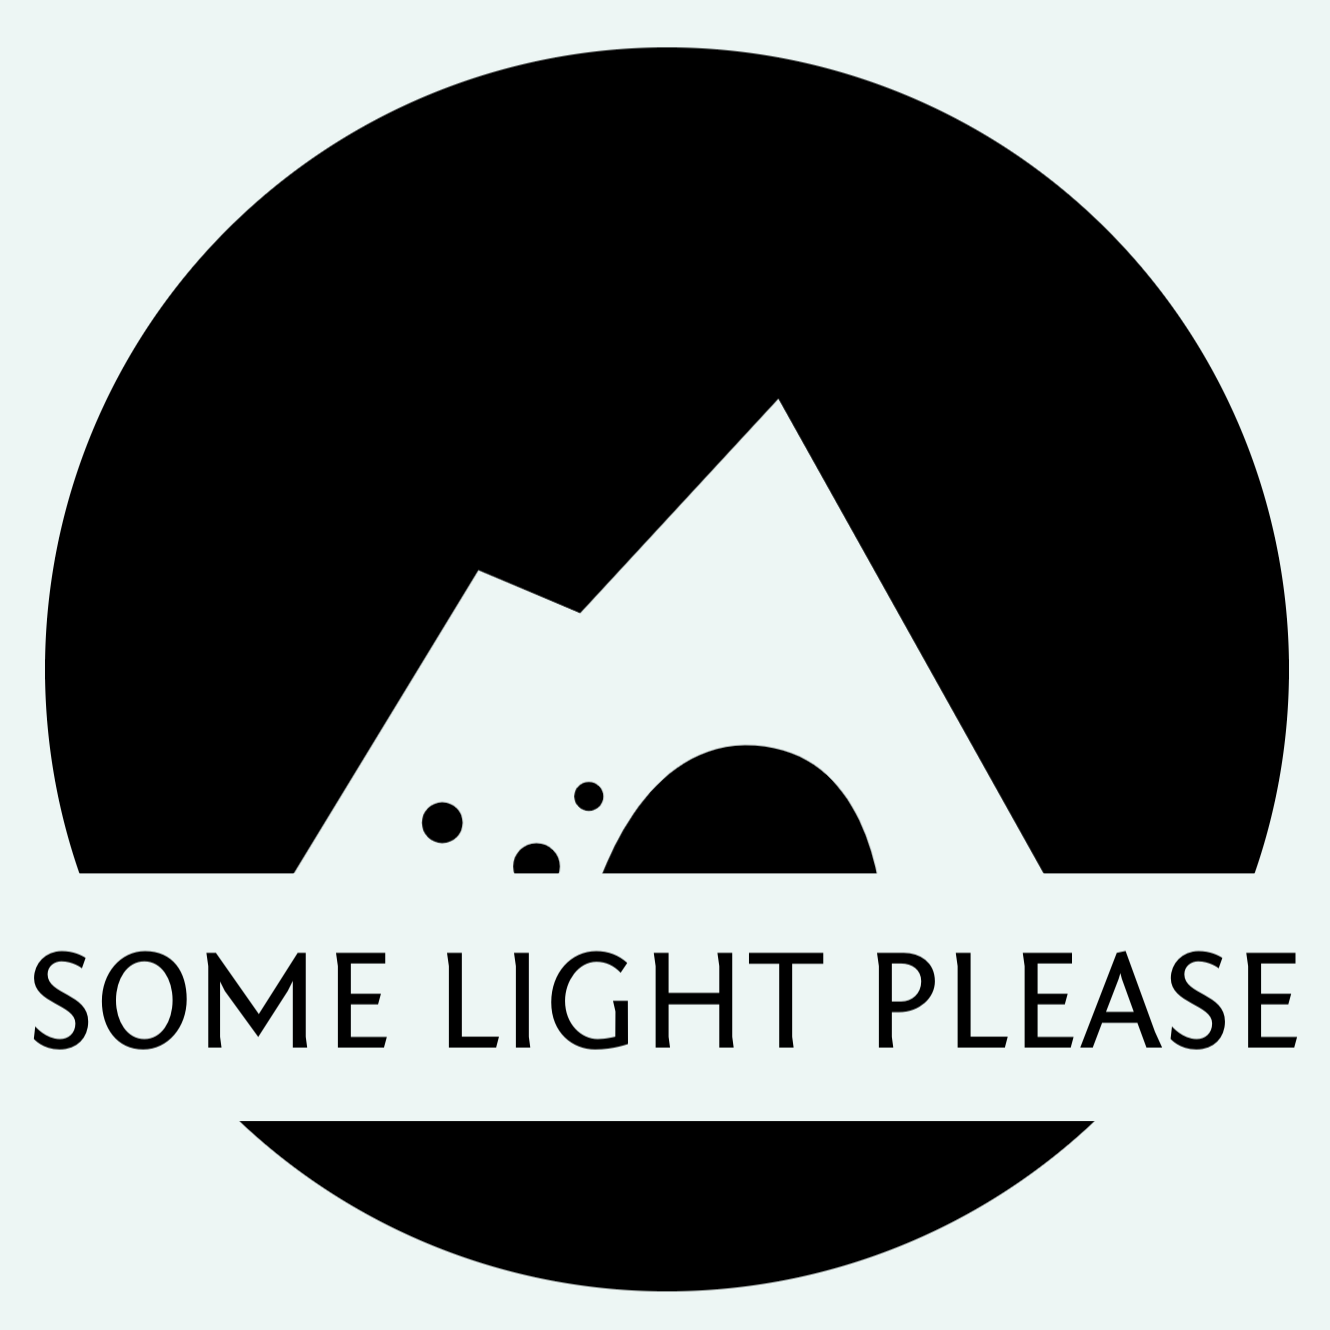 Some light please logo